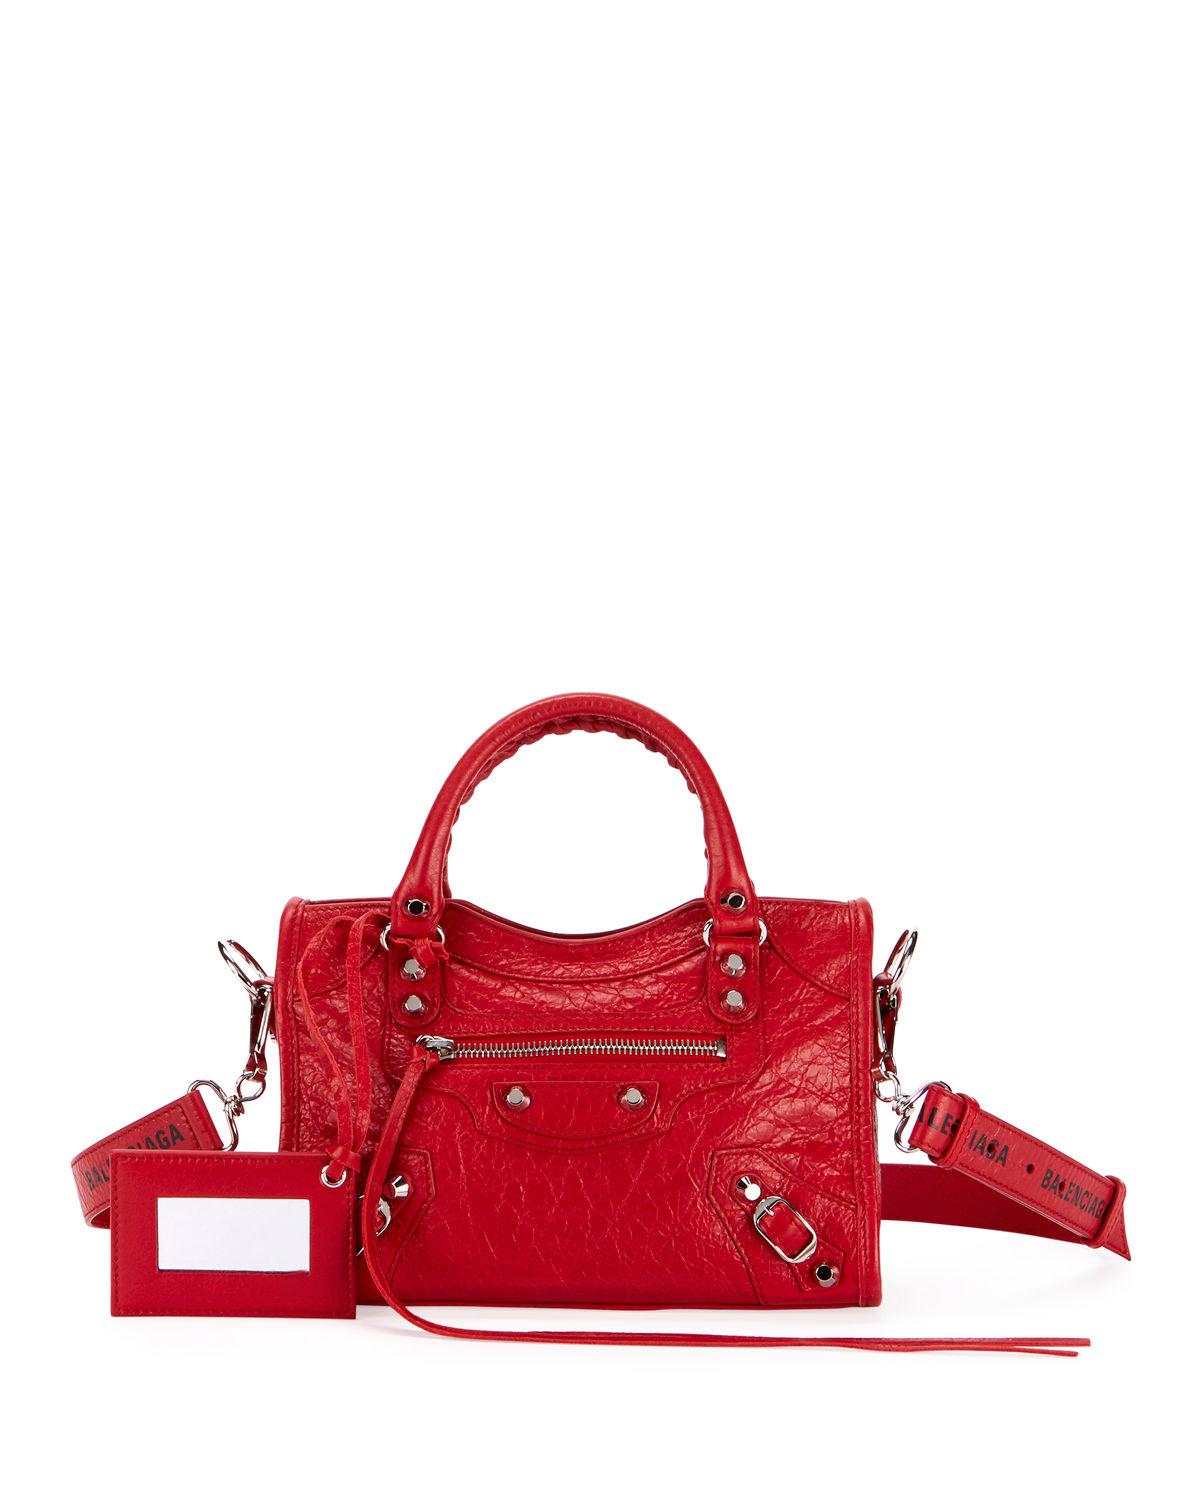 Balenciaga Leather Classic Mini City Aj Shoulder Bag in Red/Black (Red) -  Lyst